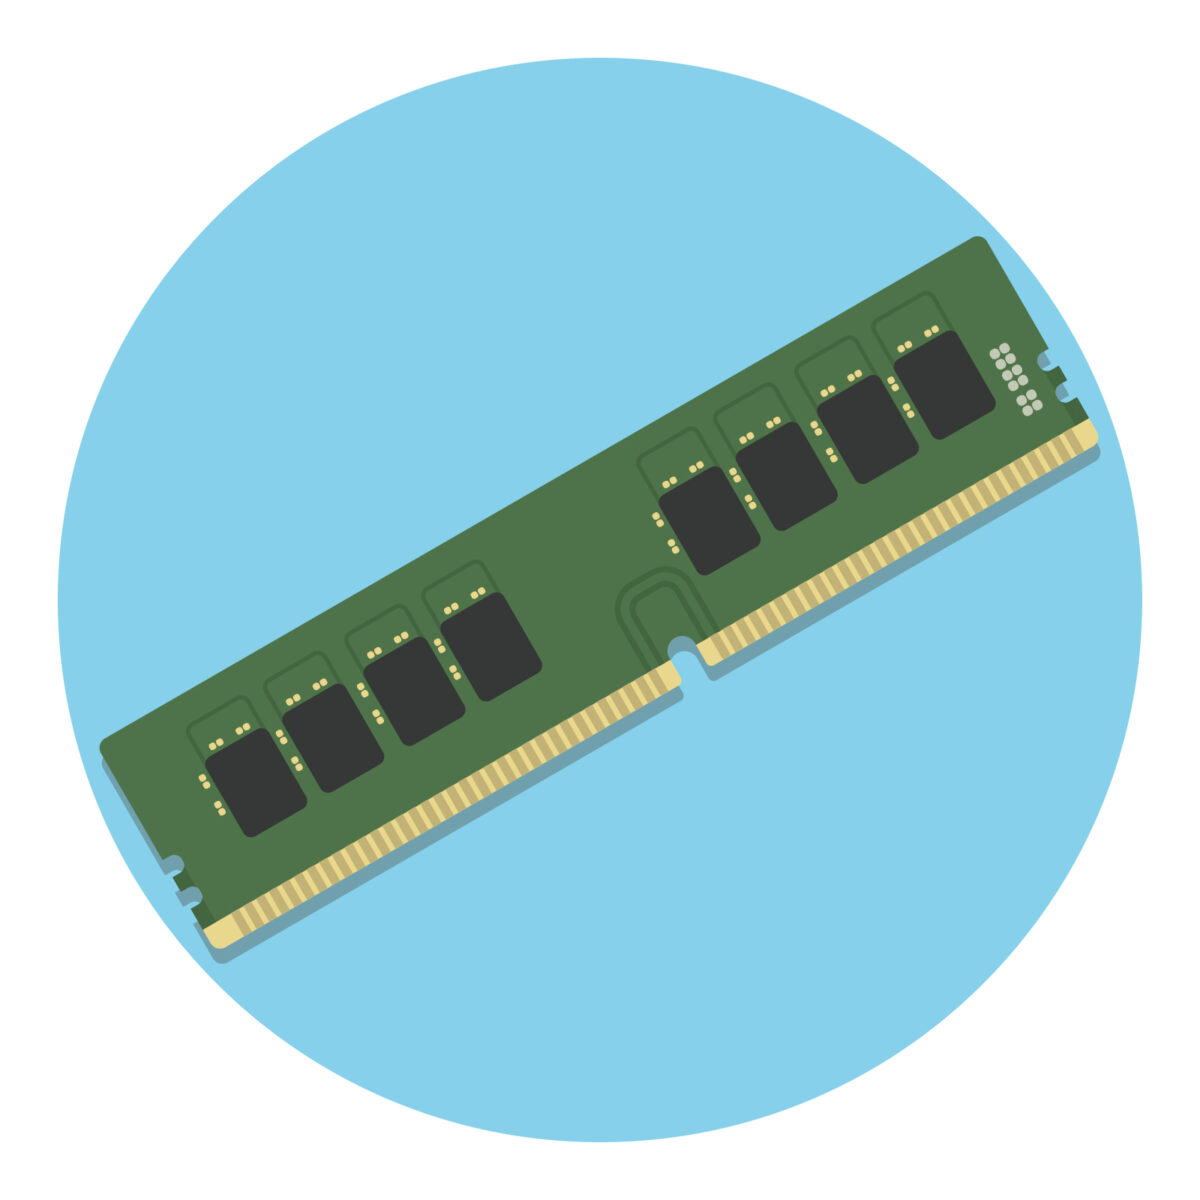 Acclamator 16GB 3200MHz Memory DDR4